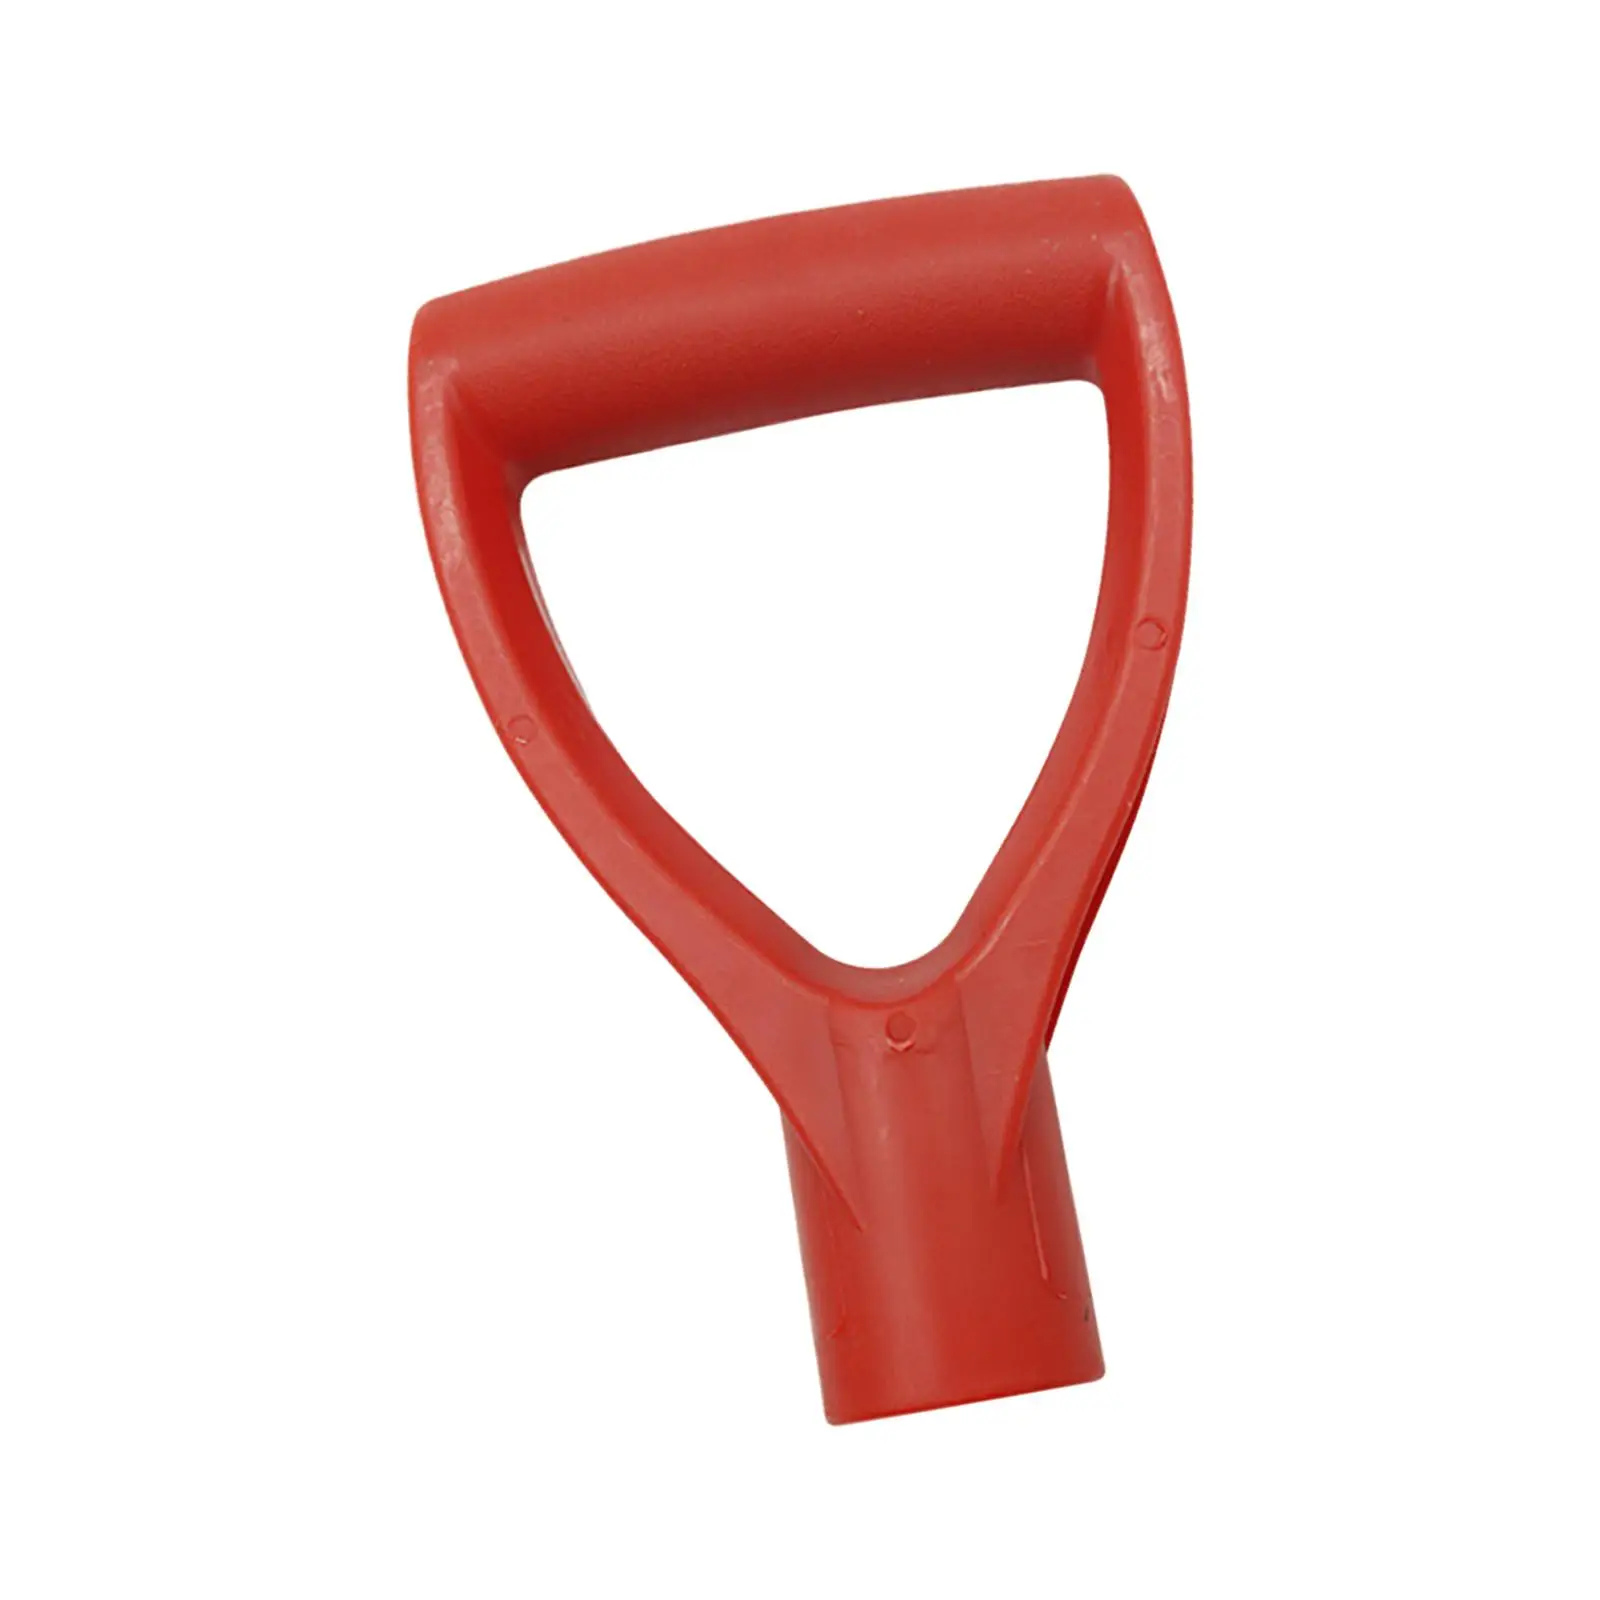 Shovel Grip Handle Red Ergonomic Durable Nonslip Spade Handle Garden Accessories for Digging Raking Gardening Tool Garden Shovel